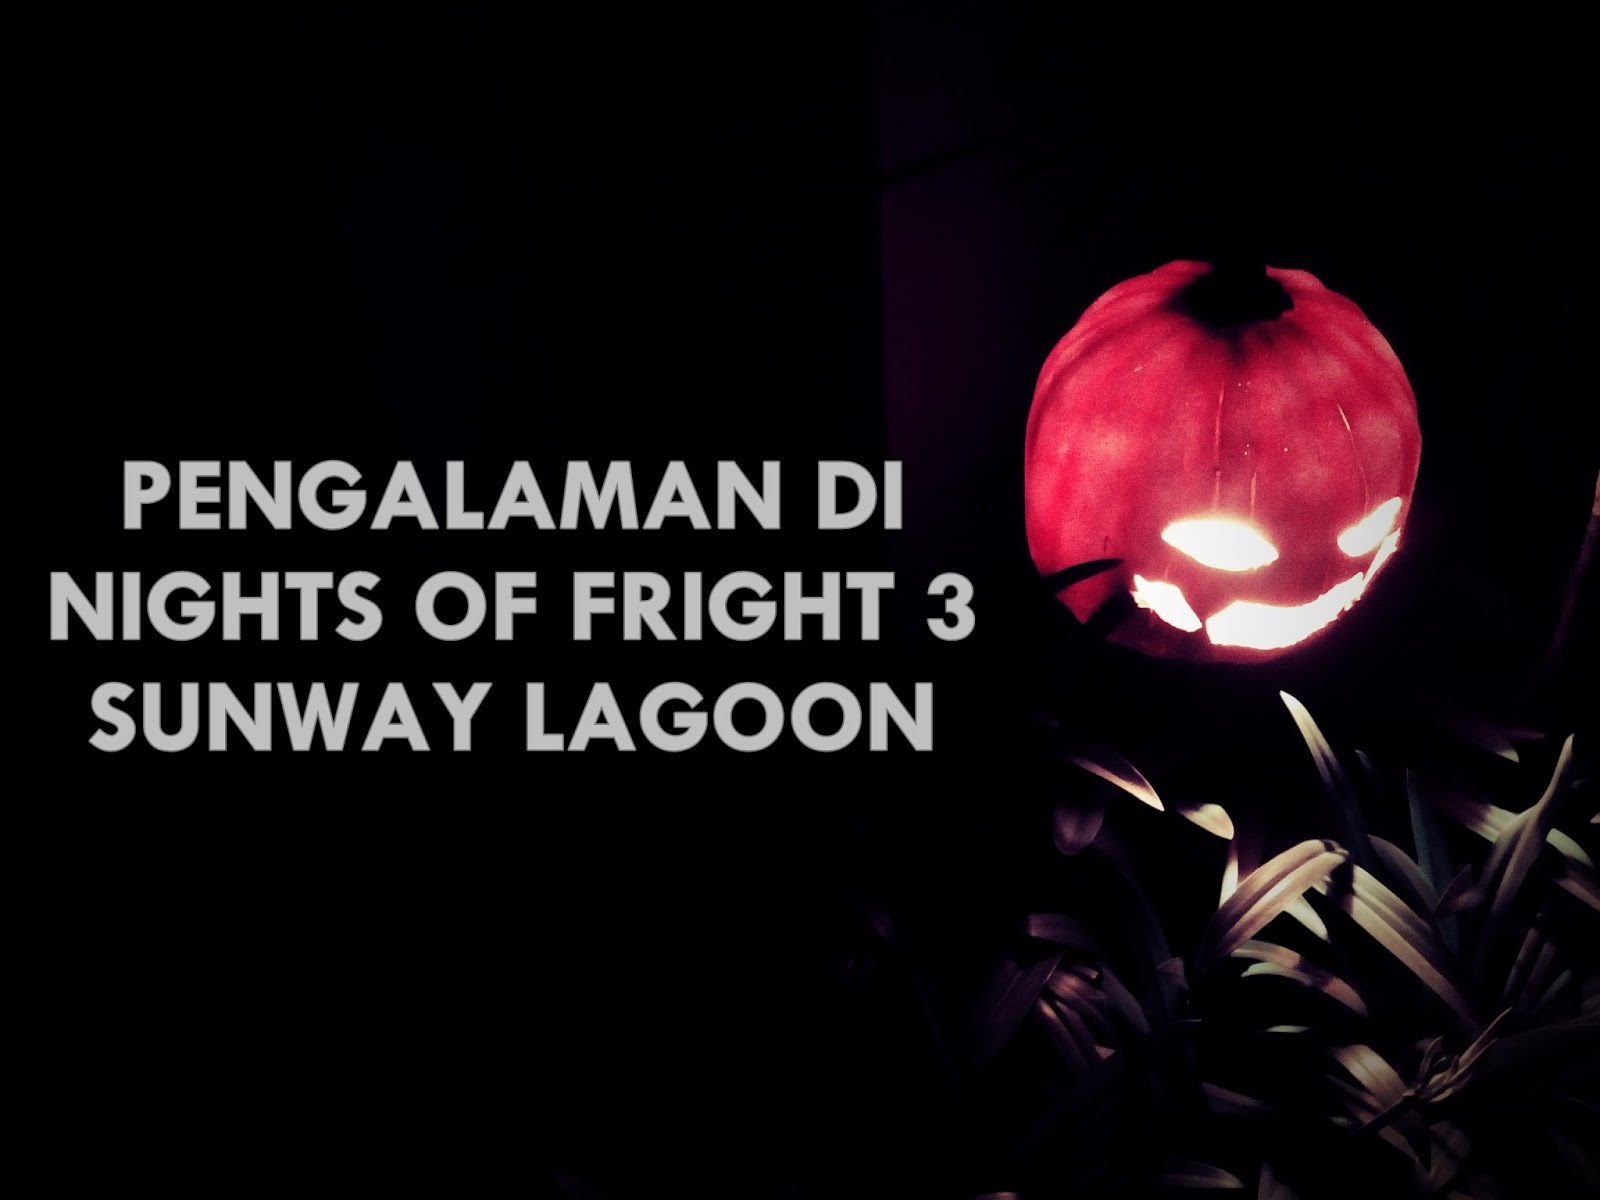 PENGALAMAN DI NIGHTS OF FRIGHT 3 SUNWAY LAGOON - Ahmad 